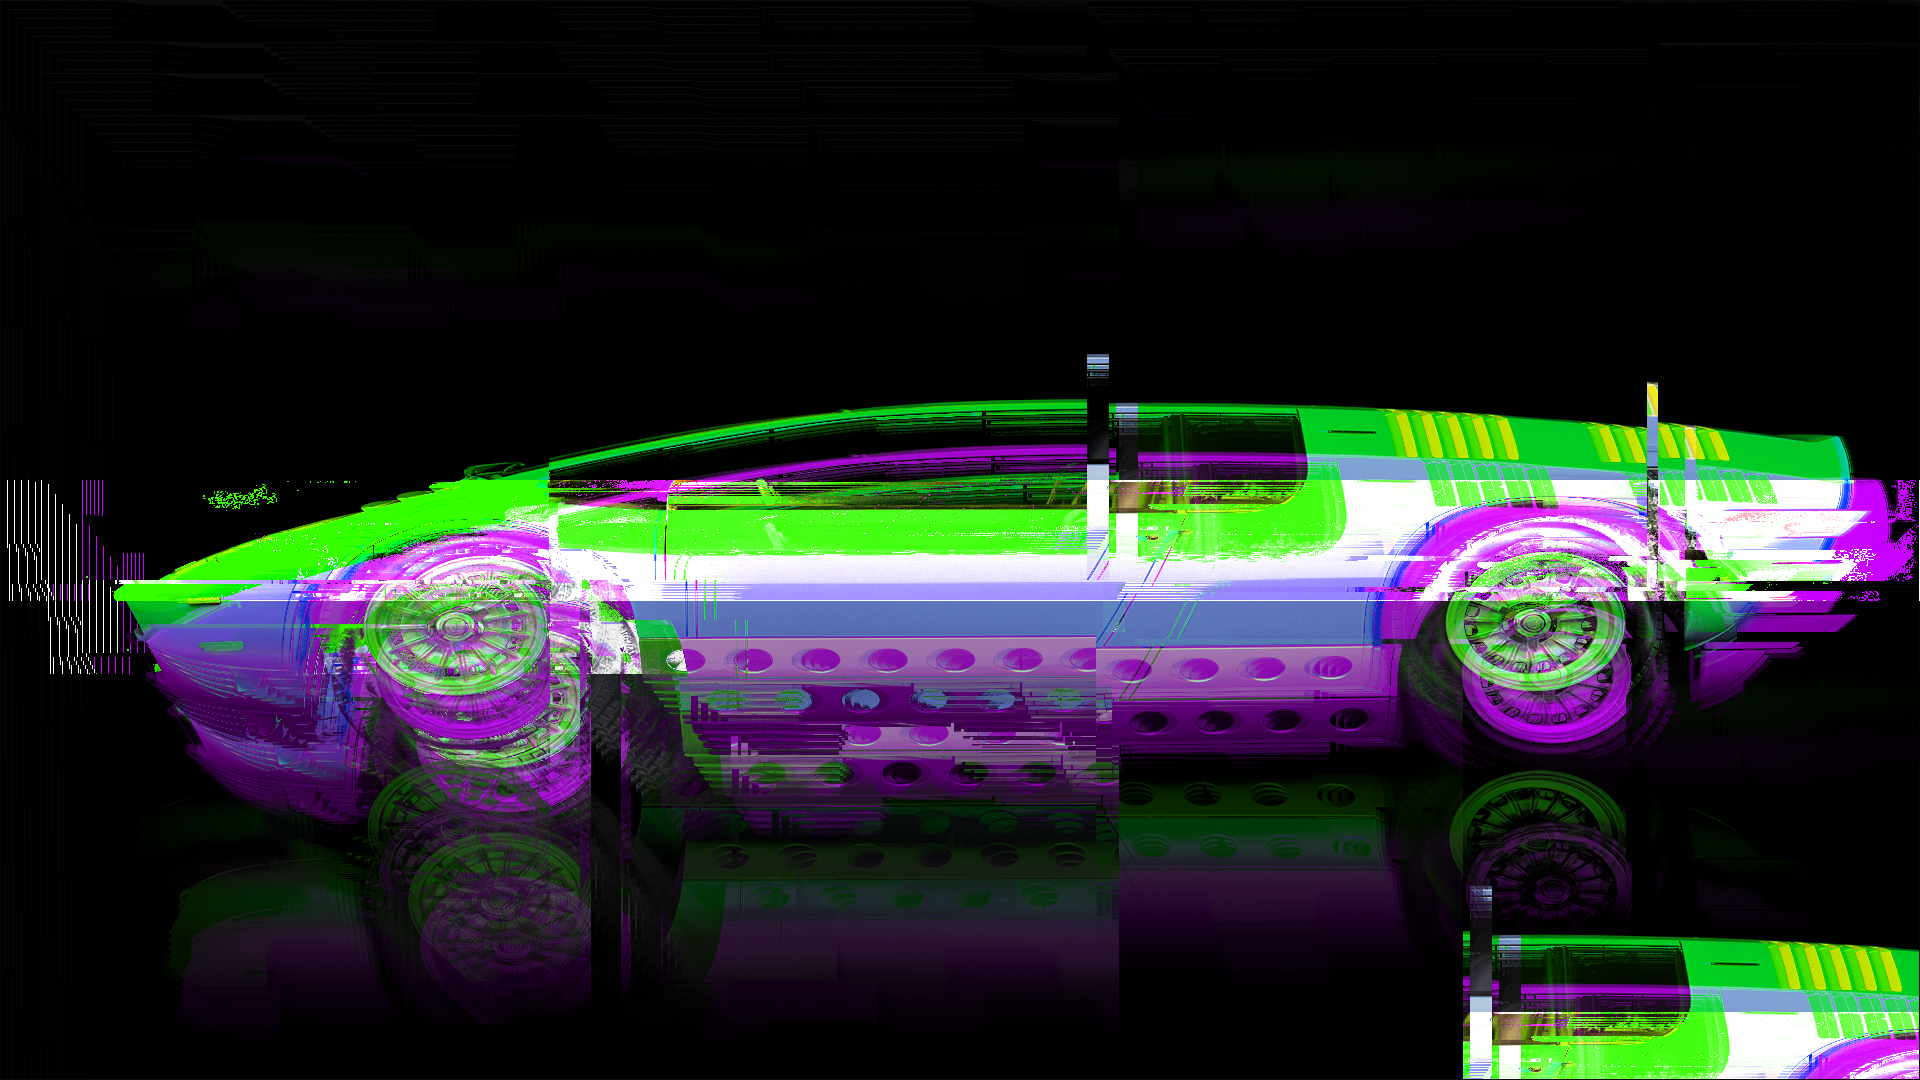 General 1920x1080 glitch art digital art car vehicle black background simple background